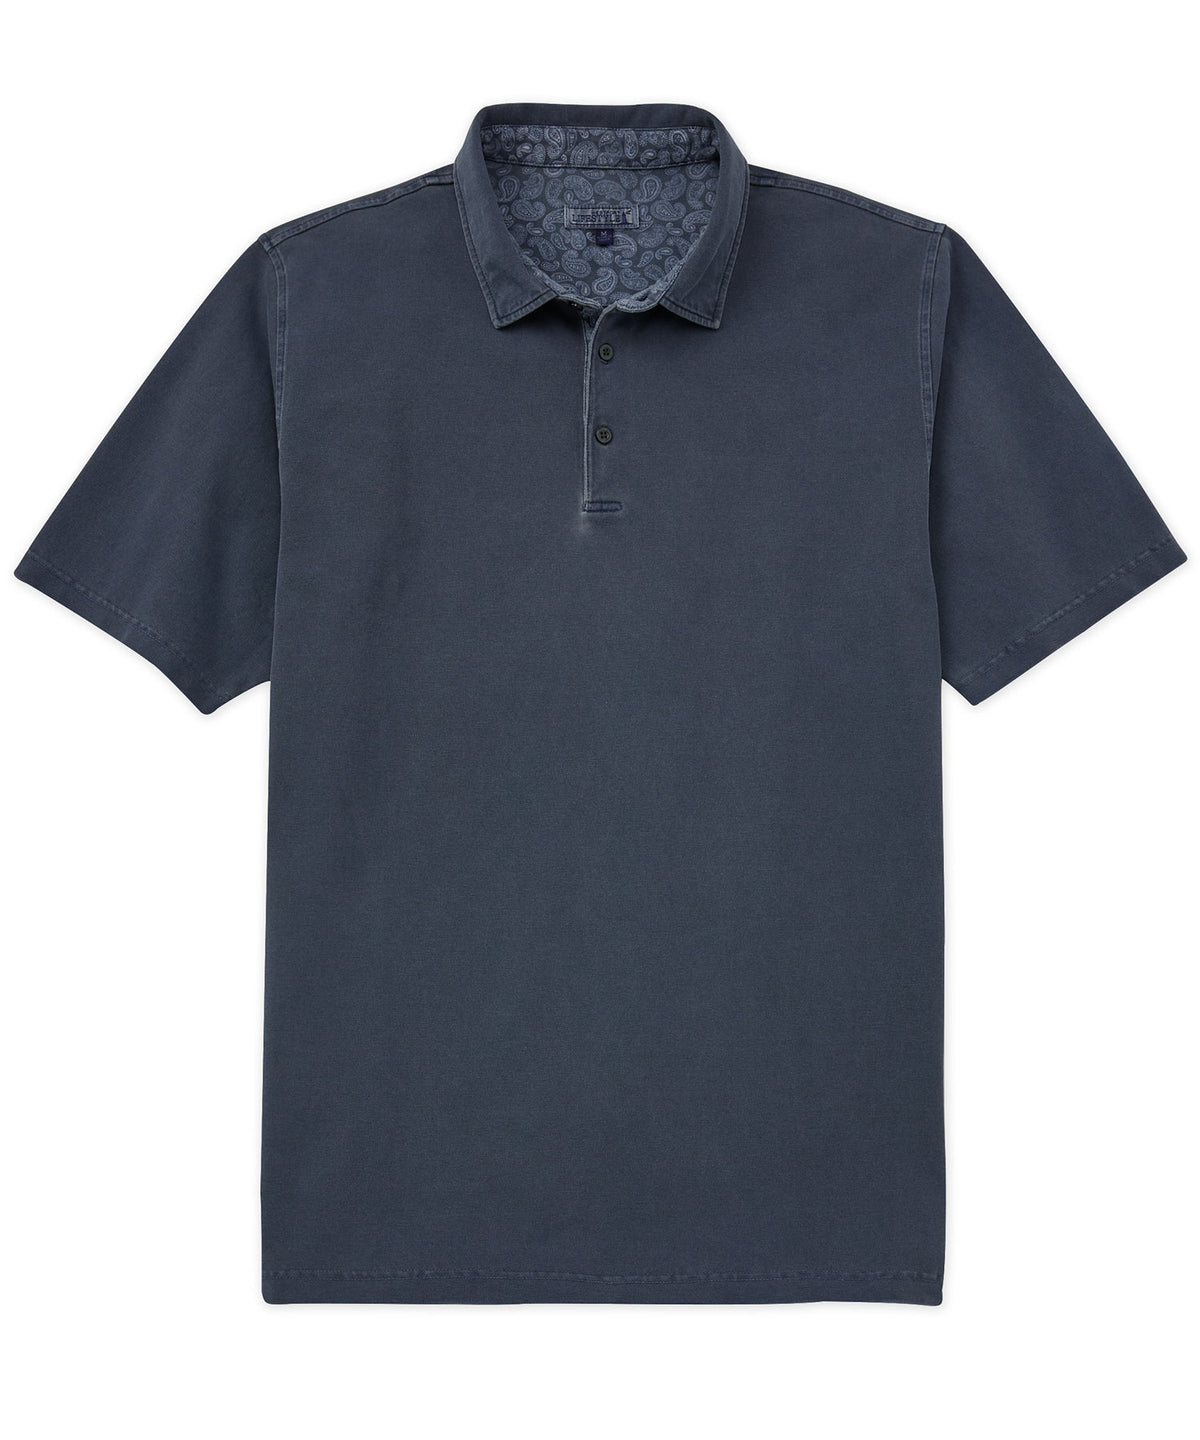 Westport Lifestyle Garment Dyed Pique Polo Knit Shirt, Men's Big & Tall